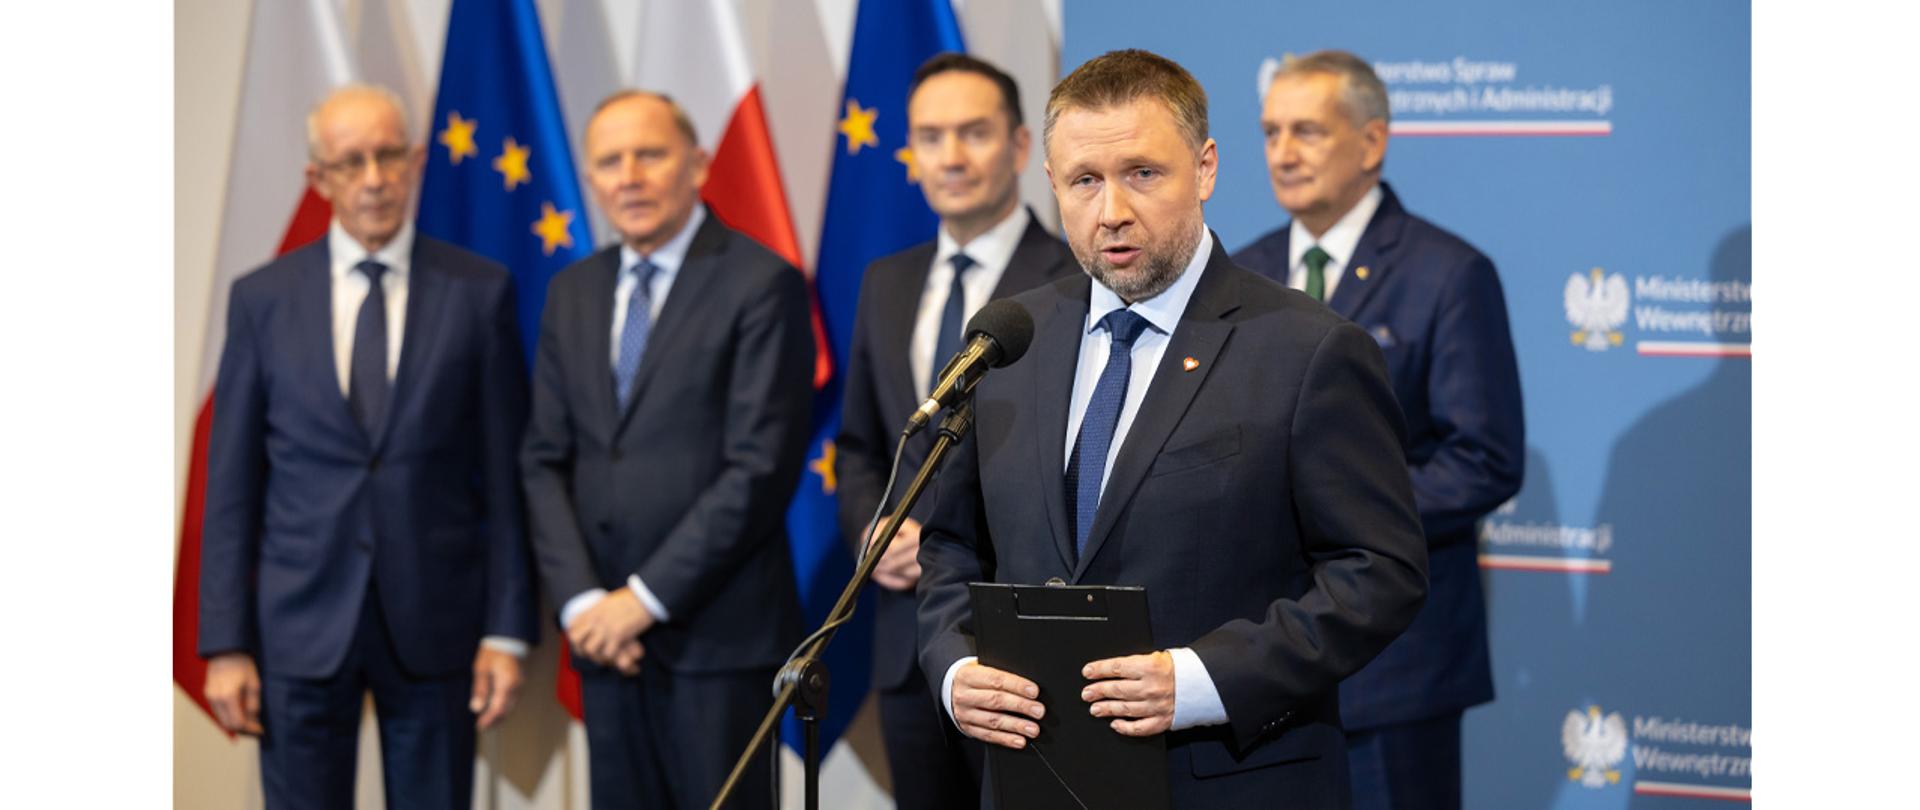 Press conference of Minister Marcin Kierwiński